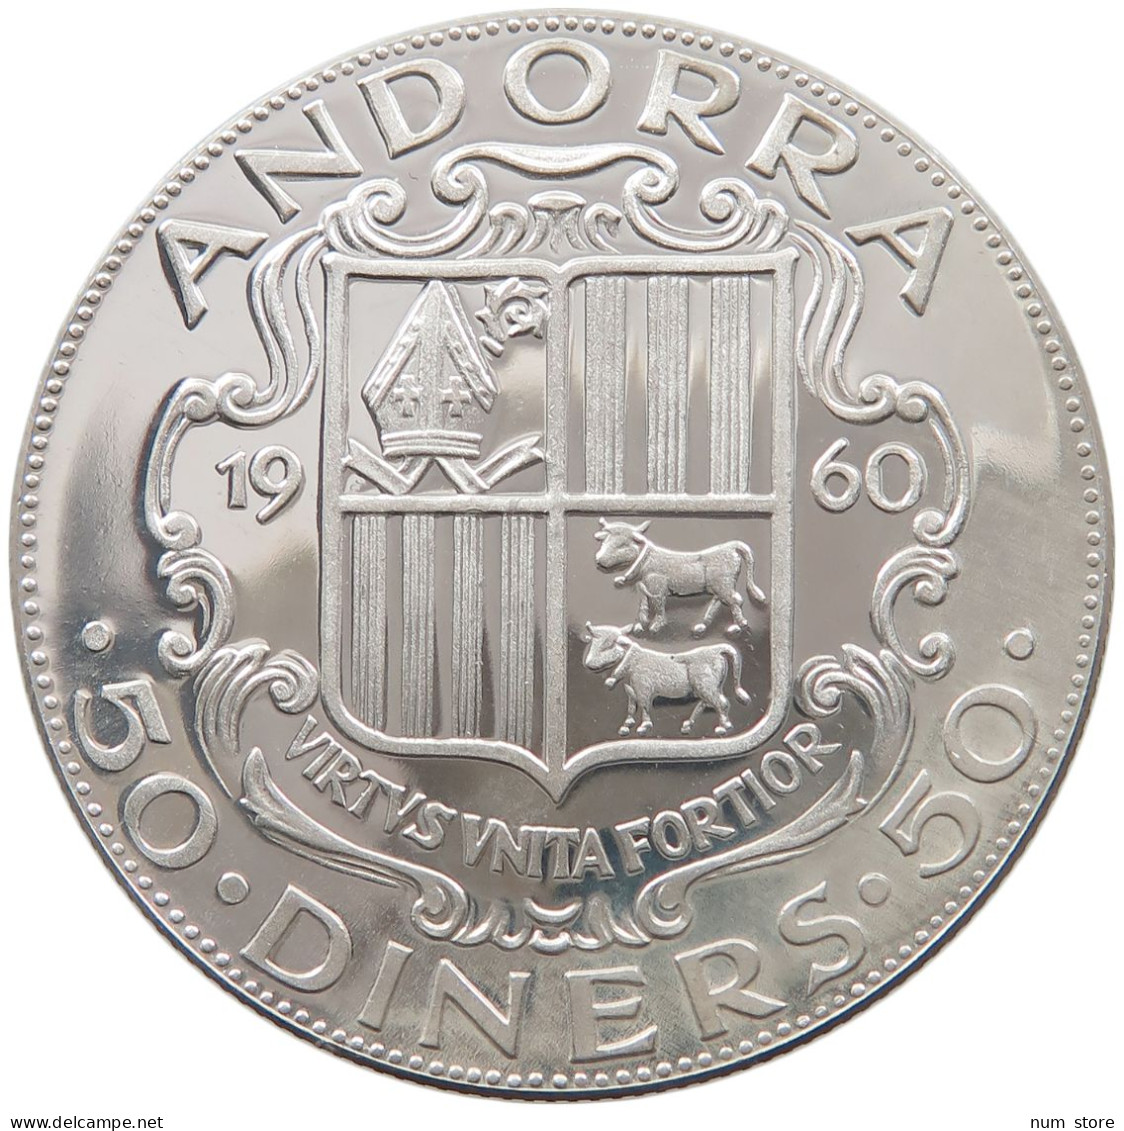 ANDORRA 50 DINERS 1960 Chalremagne #alb065 0335 - Andorra